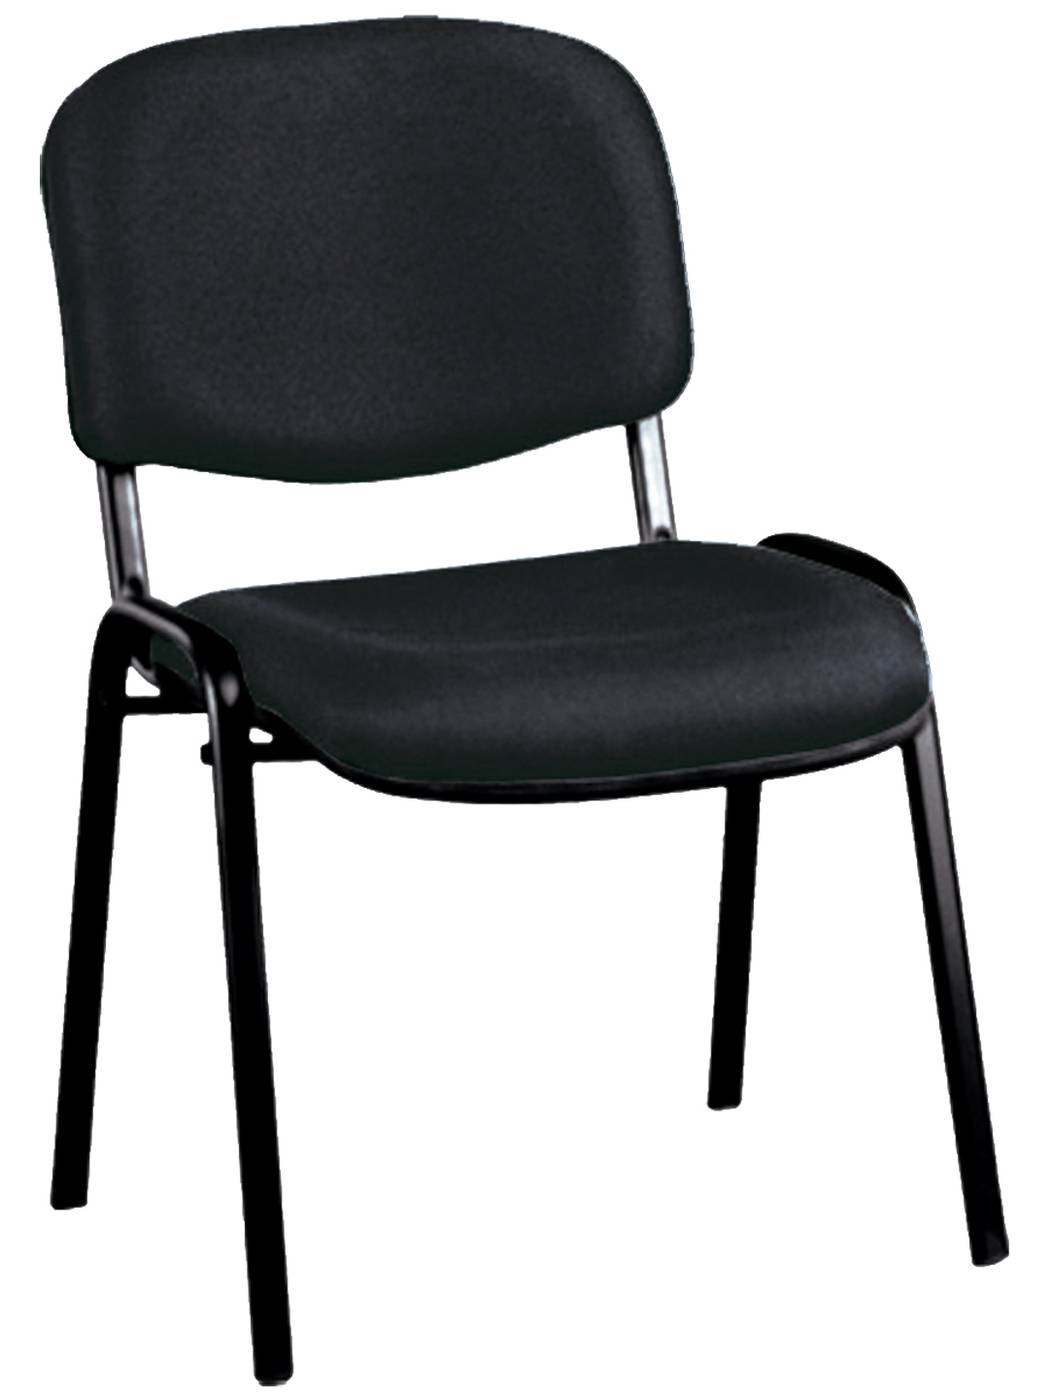 Silla de oficina apilable, con asiento y respaldo acolchado tapizado en negro